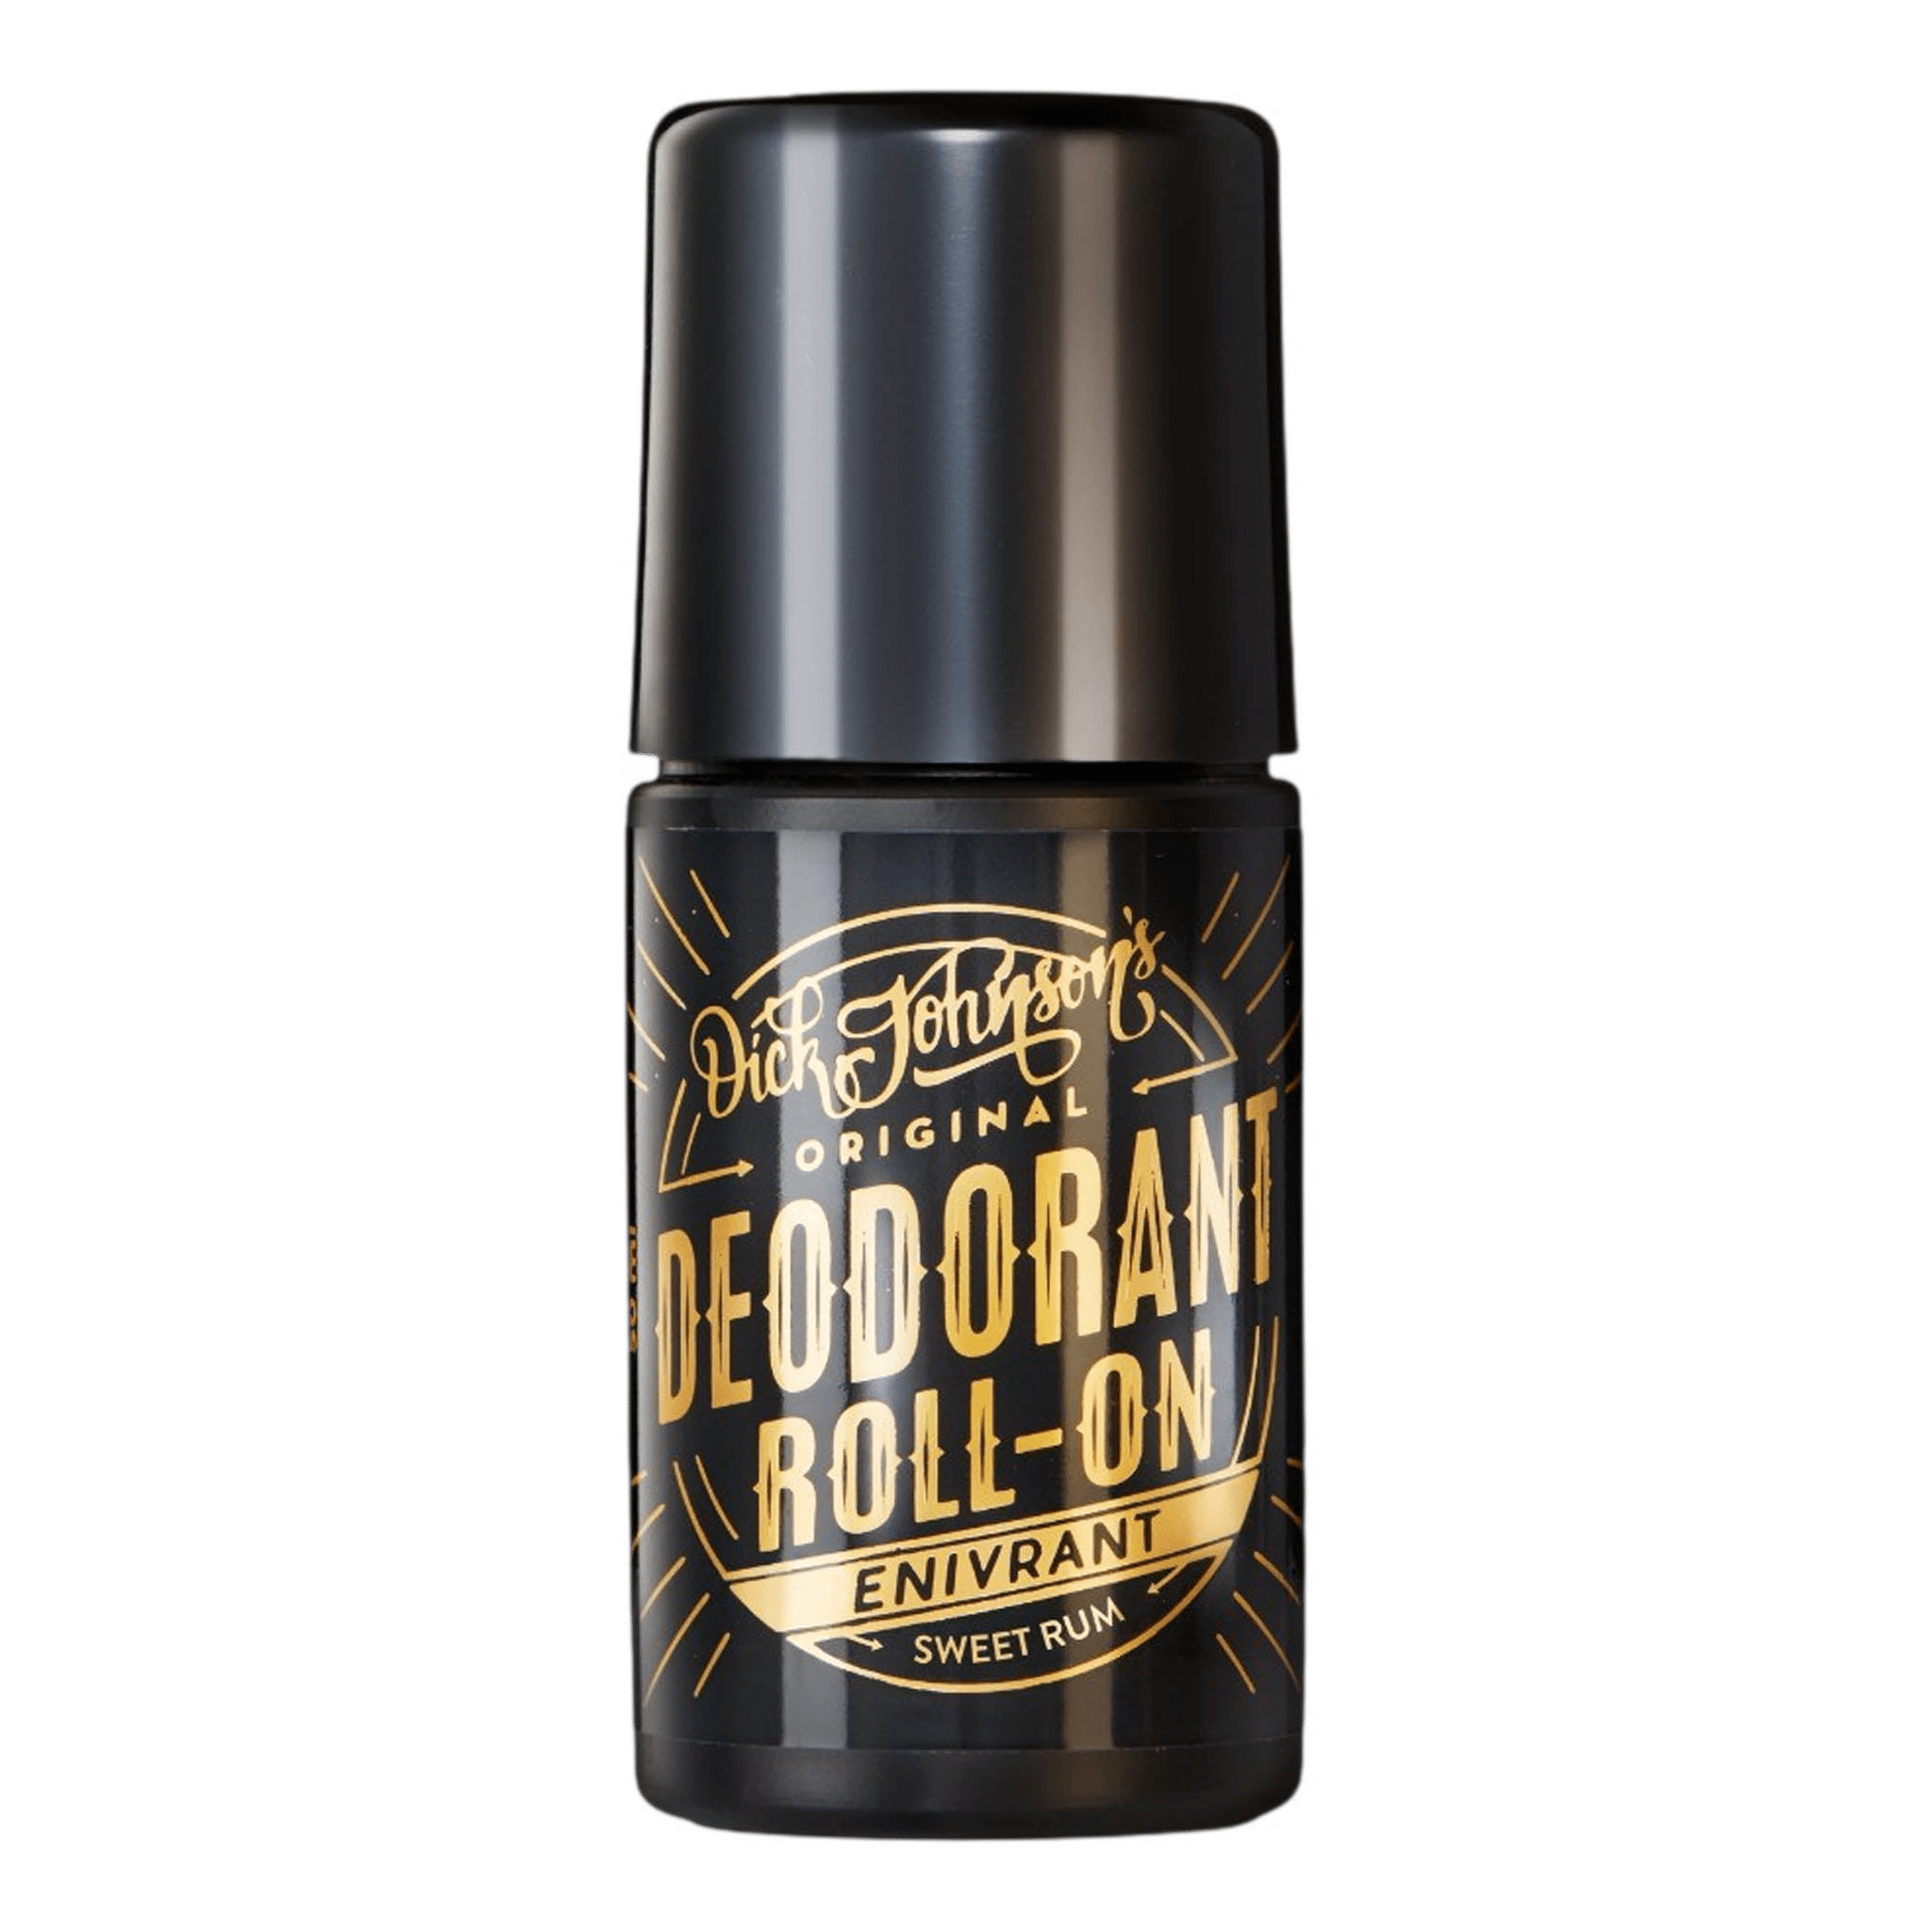 Dick Johnson Enivrant deodorant - Sweet Rum